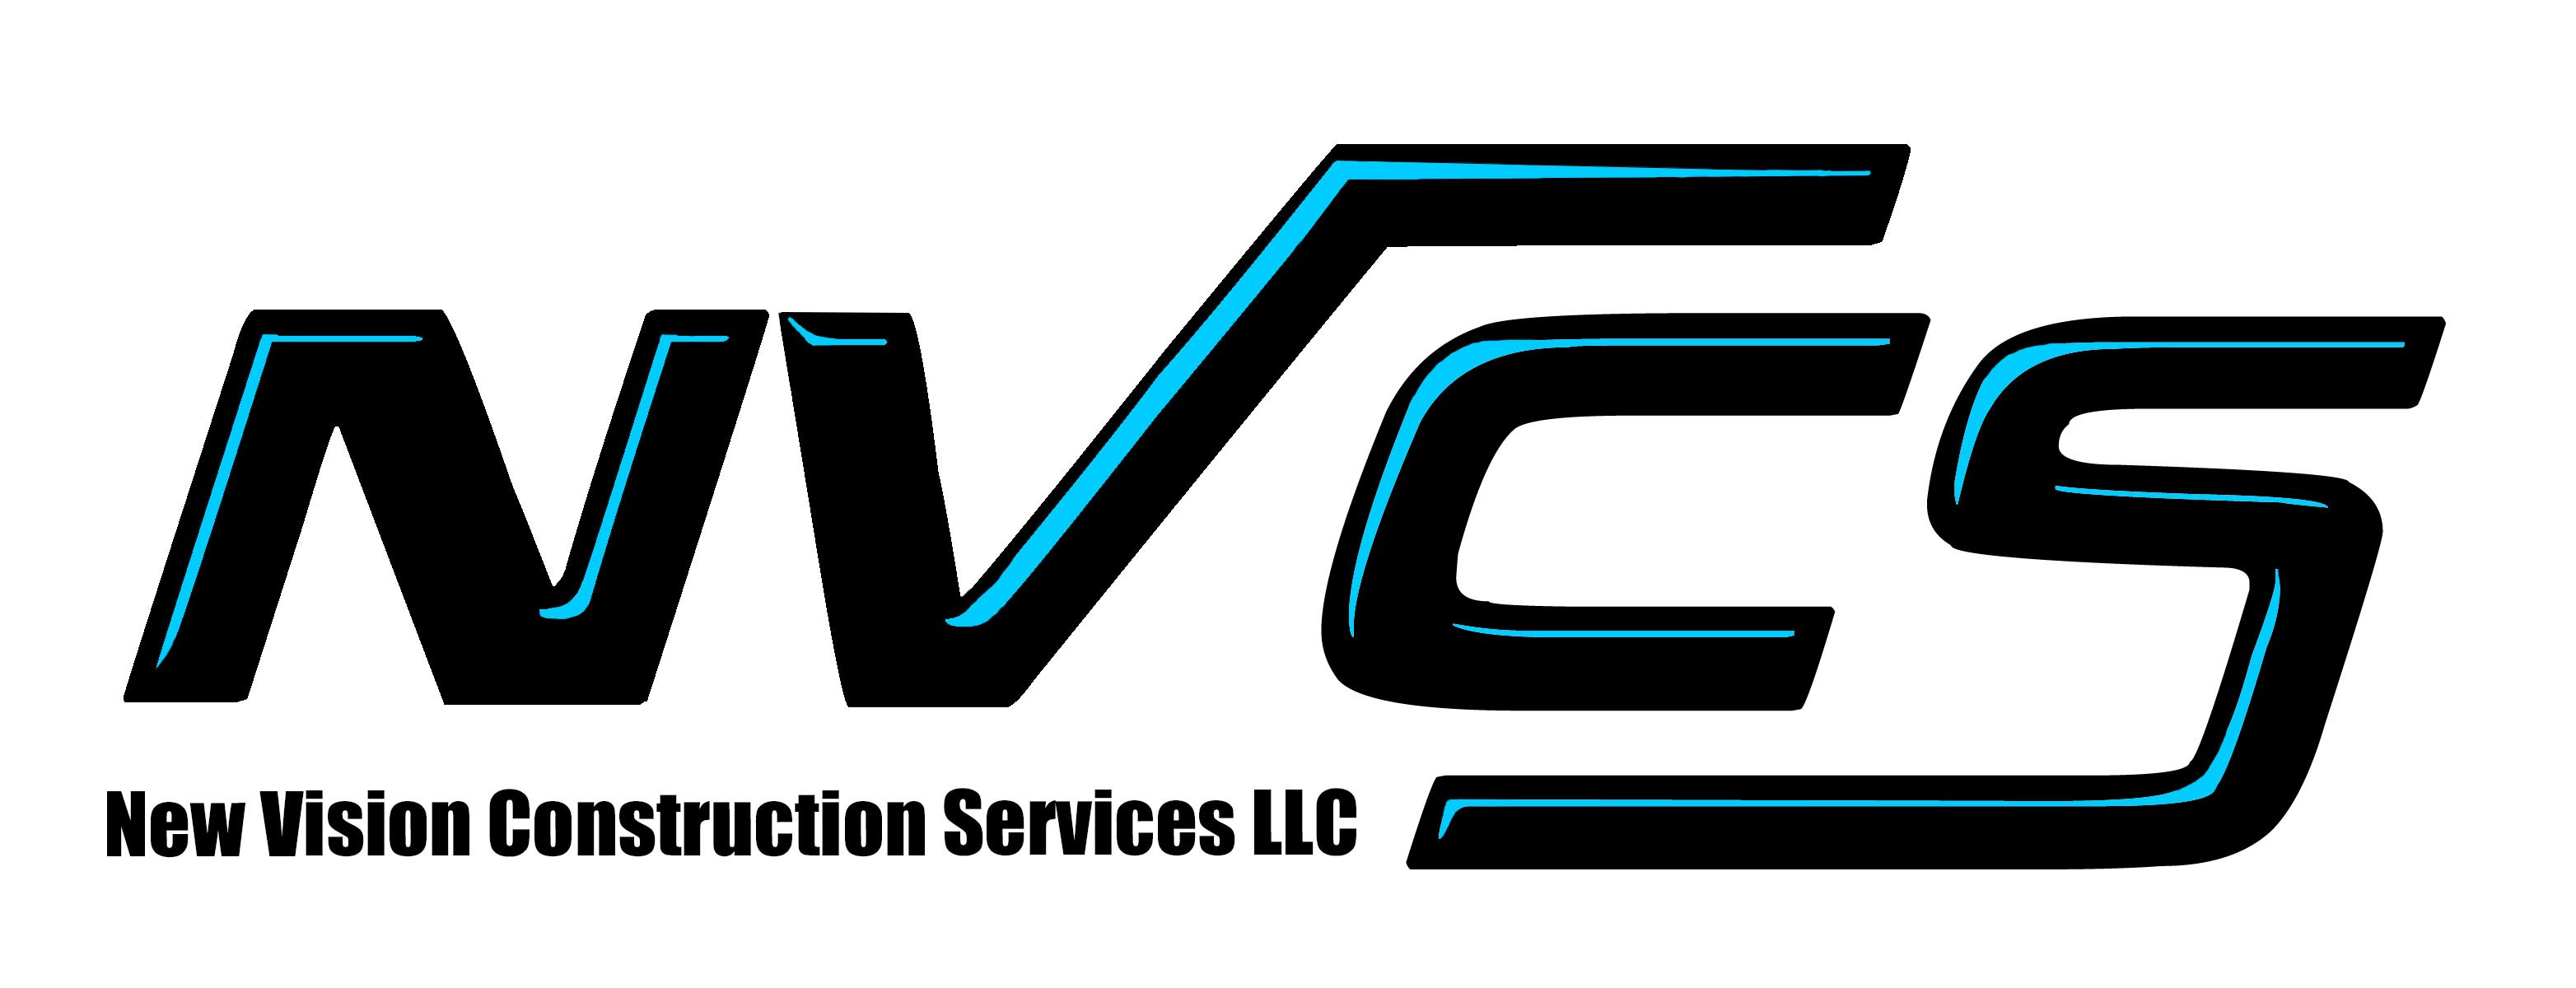 New Vision Construction Services LLC Logo